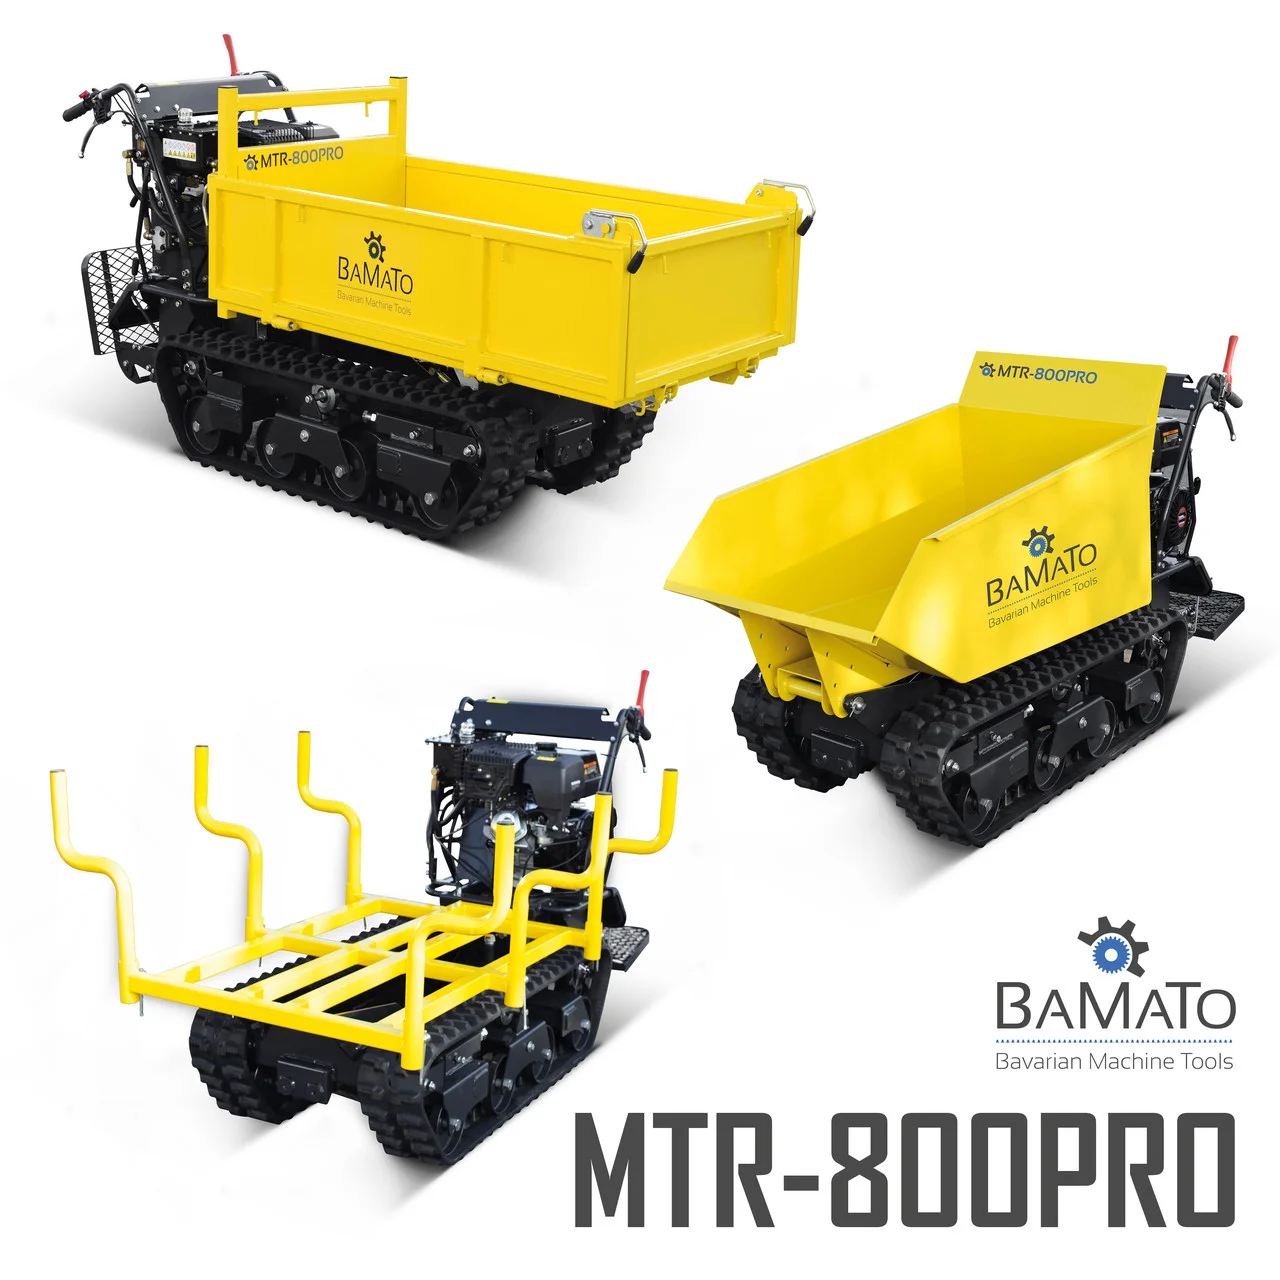  ,   Bamato MTR-800 (MTR-800PRO)